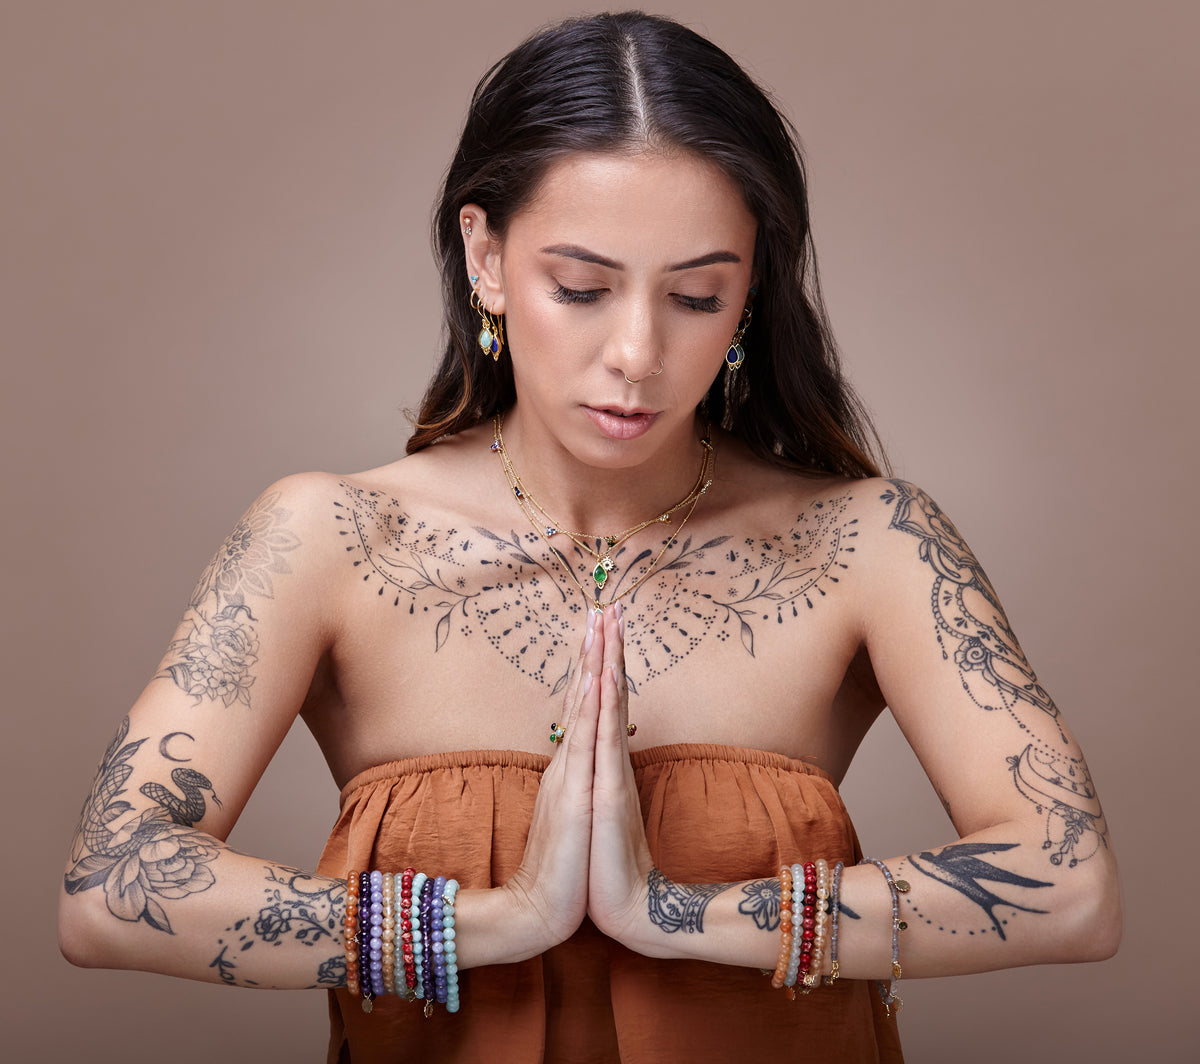 Flickr: Everyone's photos taken near Tatuagem de Mandala , Anahata Chakra  Tattoo by Pablo Dellic, in the last month